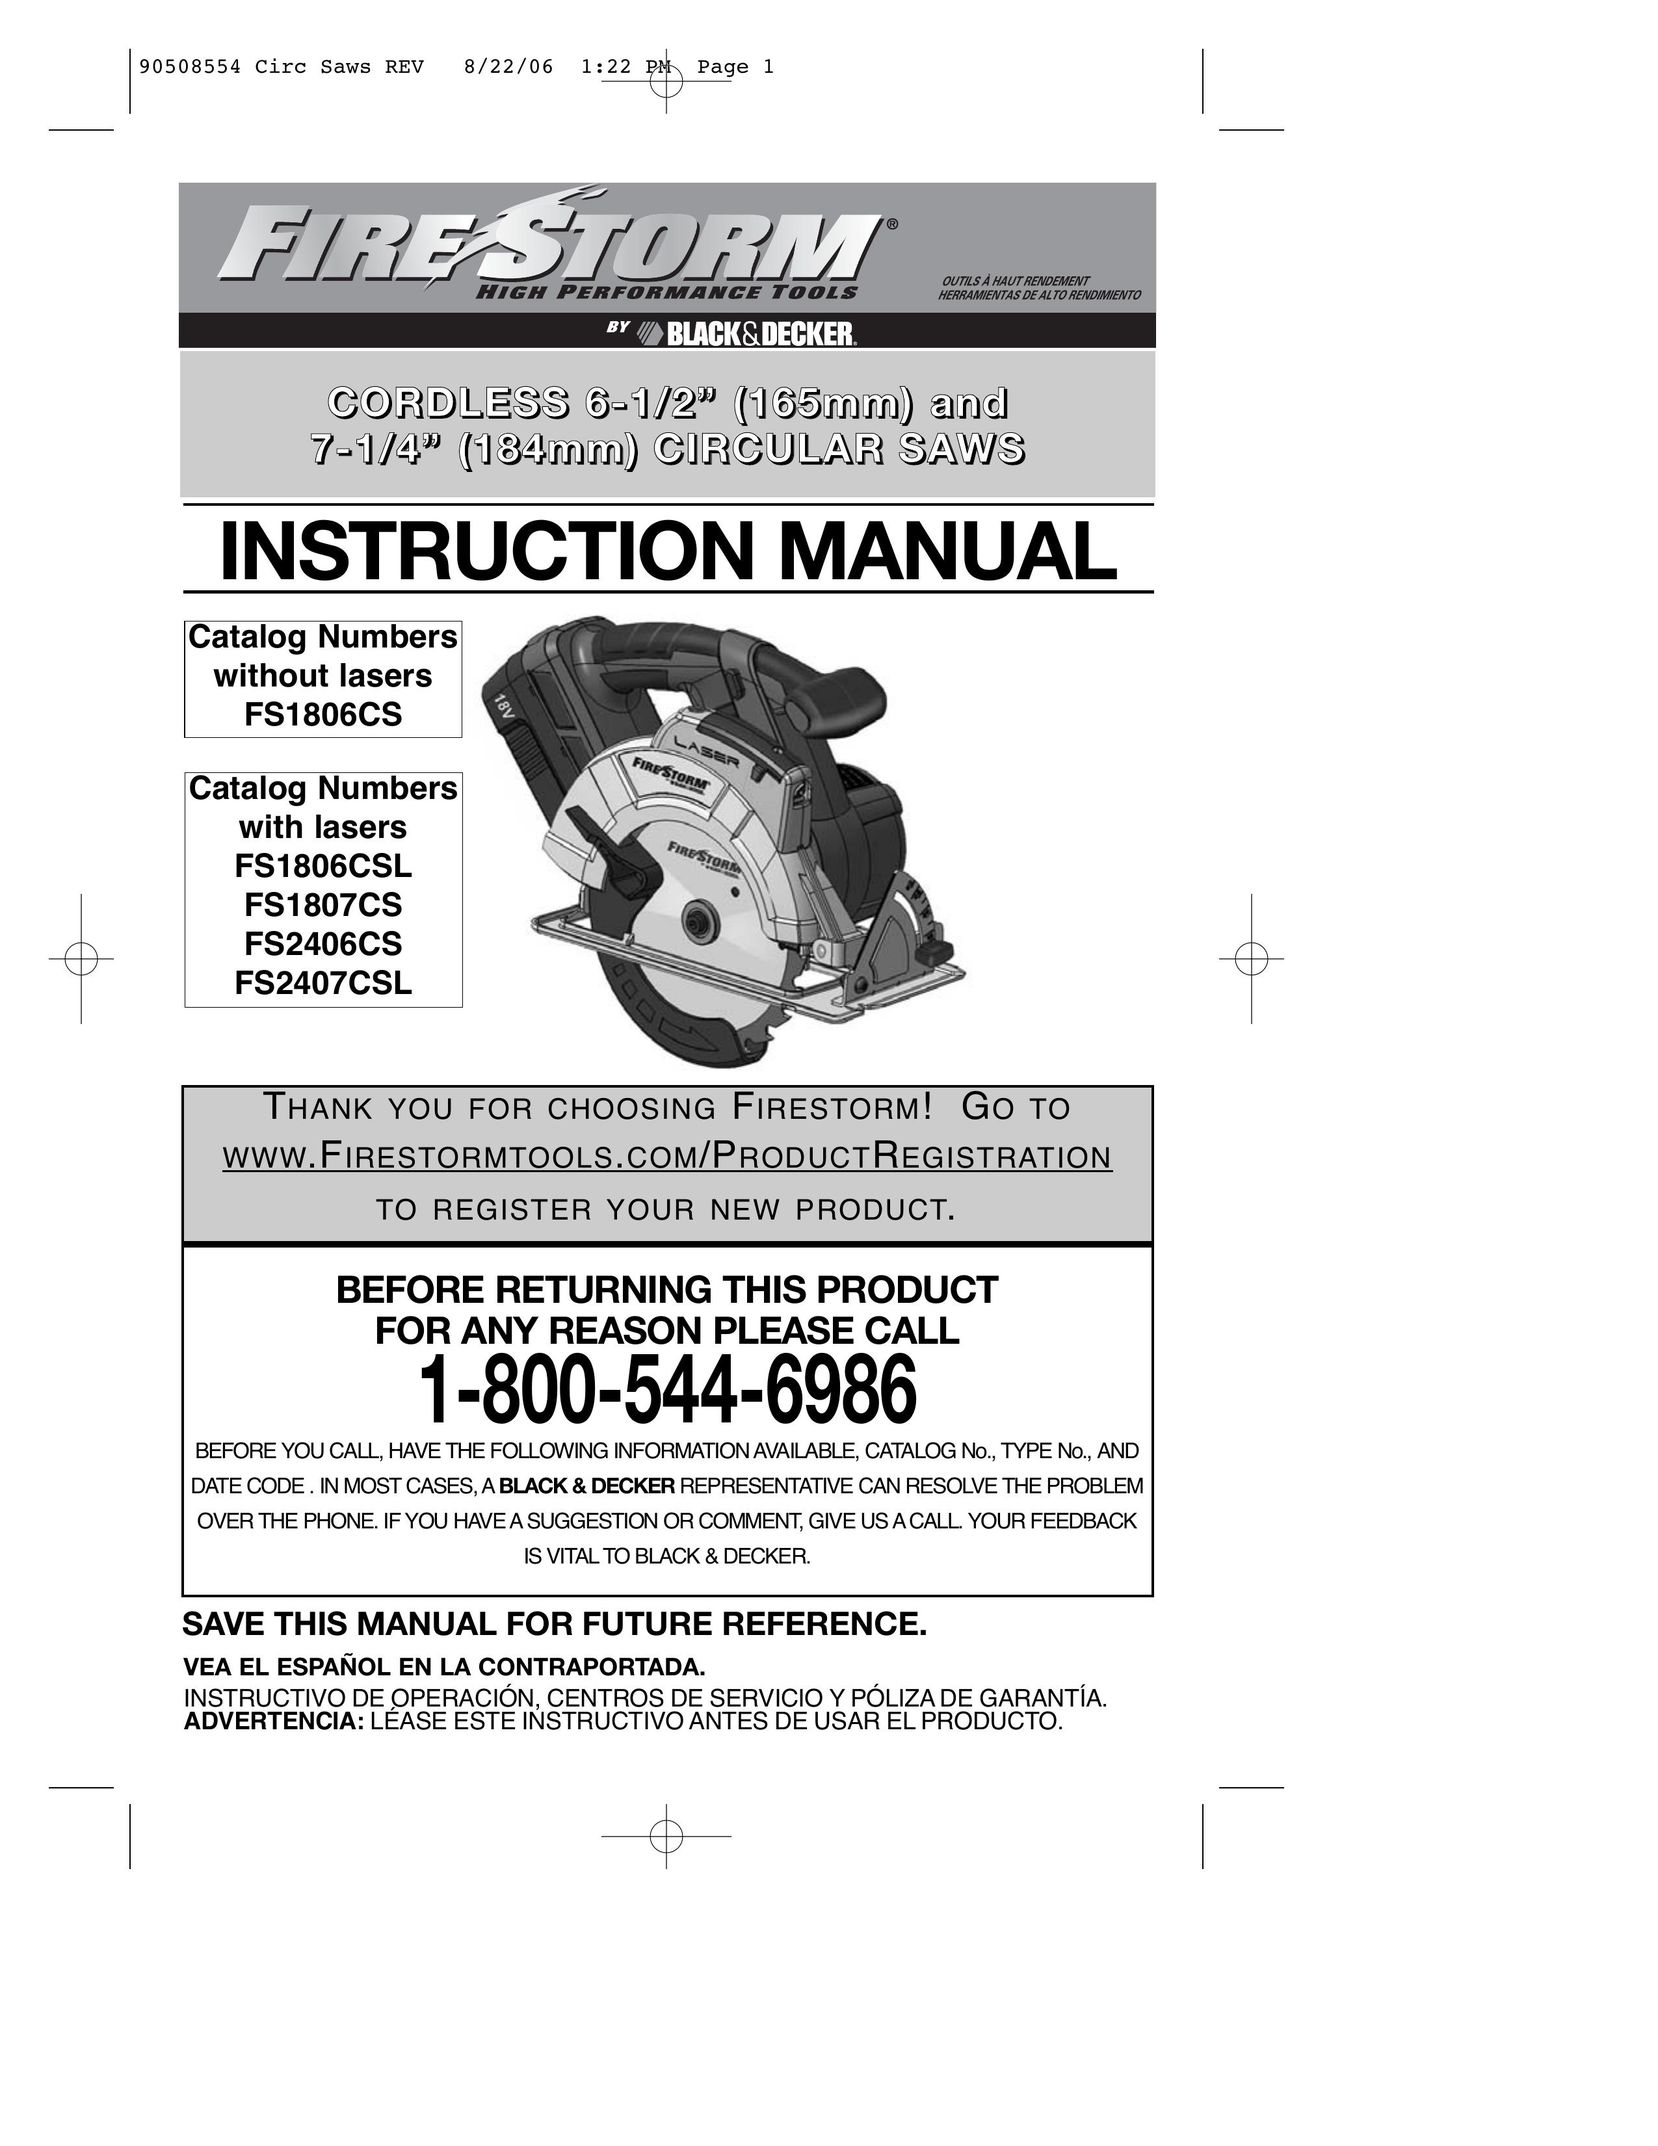 Black & Decker FS1807CS Cordless Saw User Manual